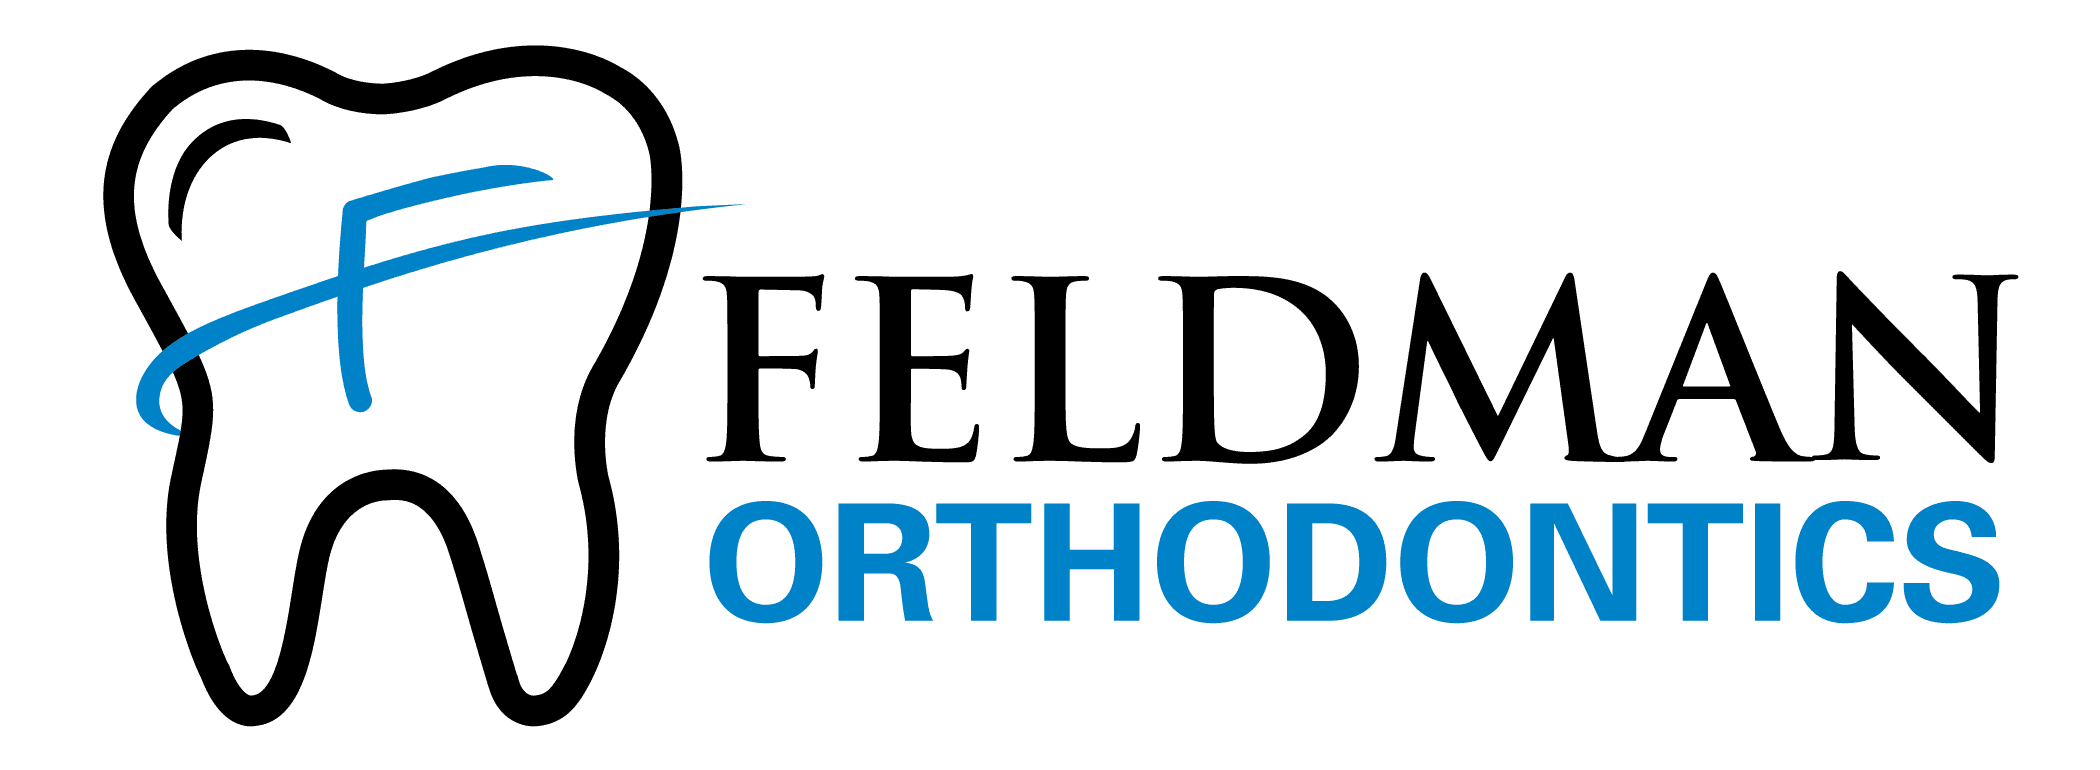 Feldman Orthodontics